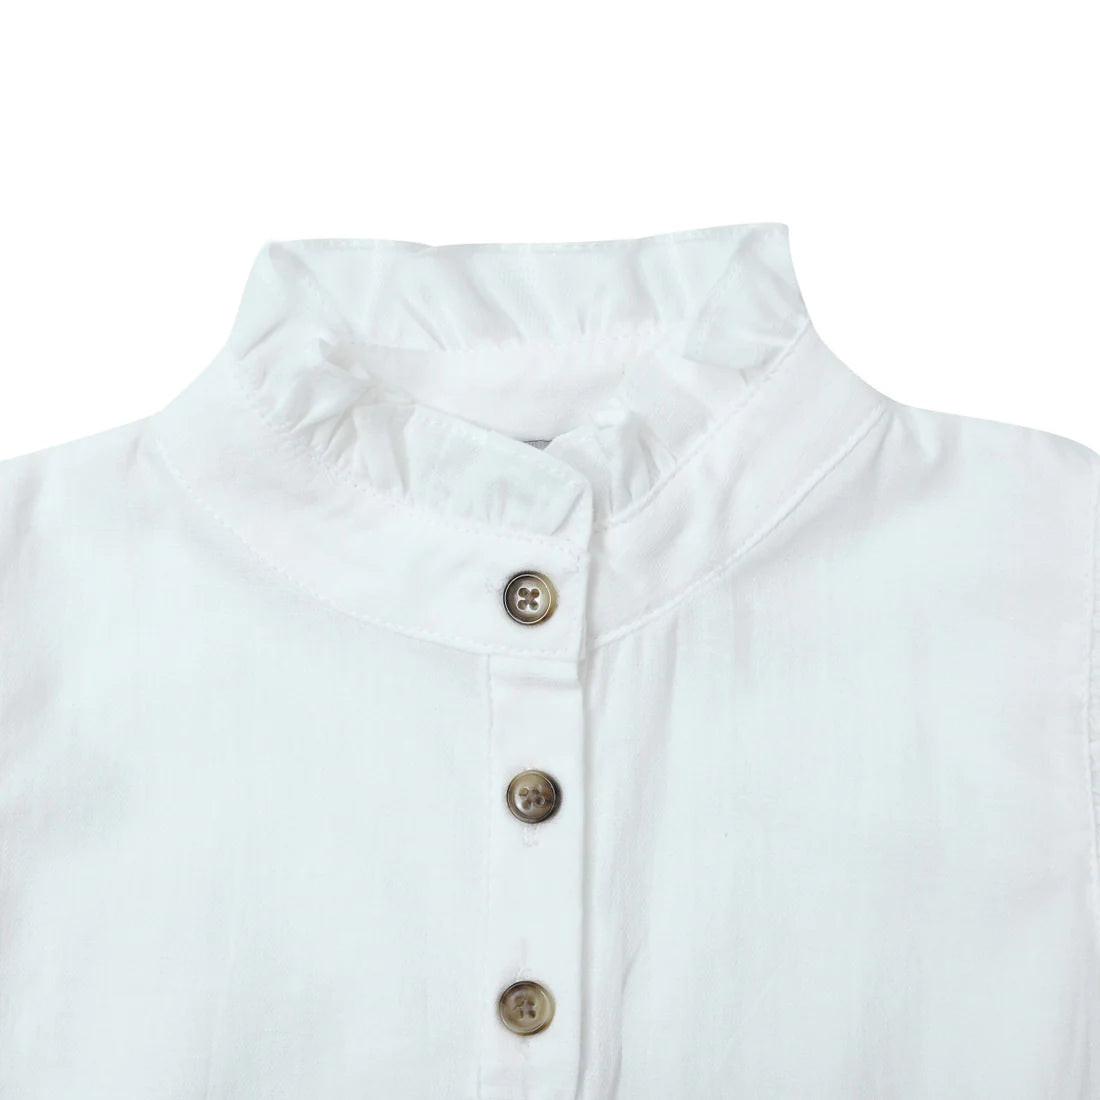 Steffie blouse off white, Donsje Amsterdam